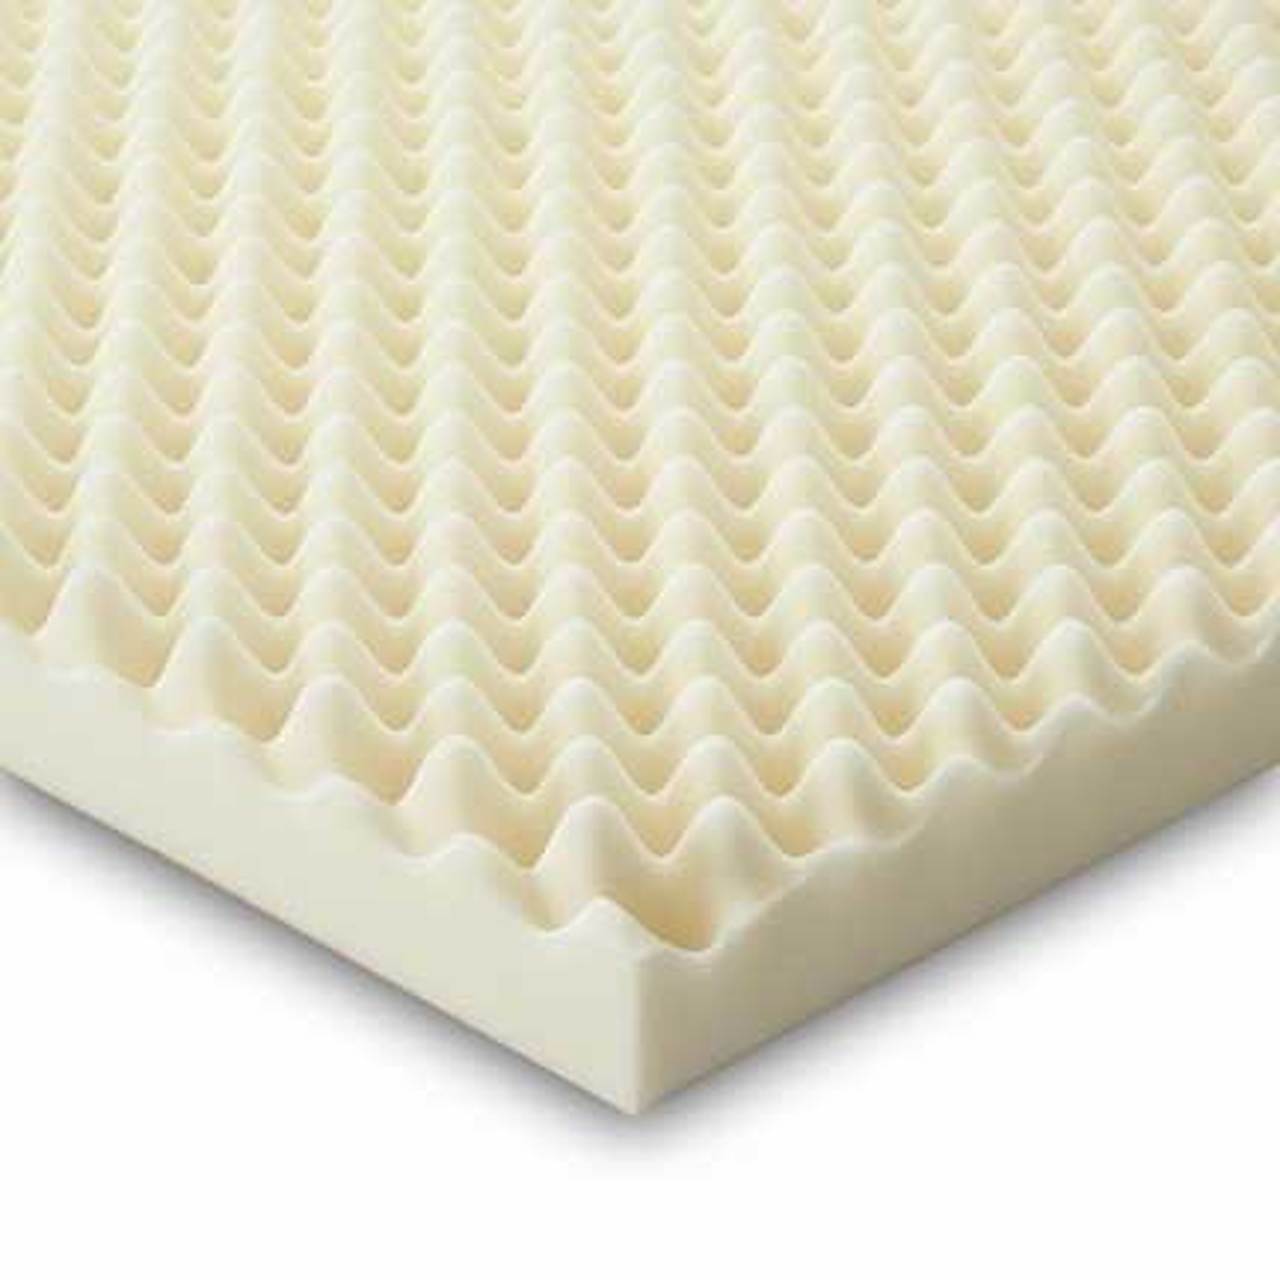 10FK-06 | Classic Brands 7 Inch High Density Foam Mattress - Medium Feel - Bed in a Box - 10-Year Warranty